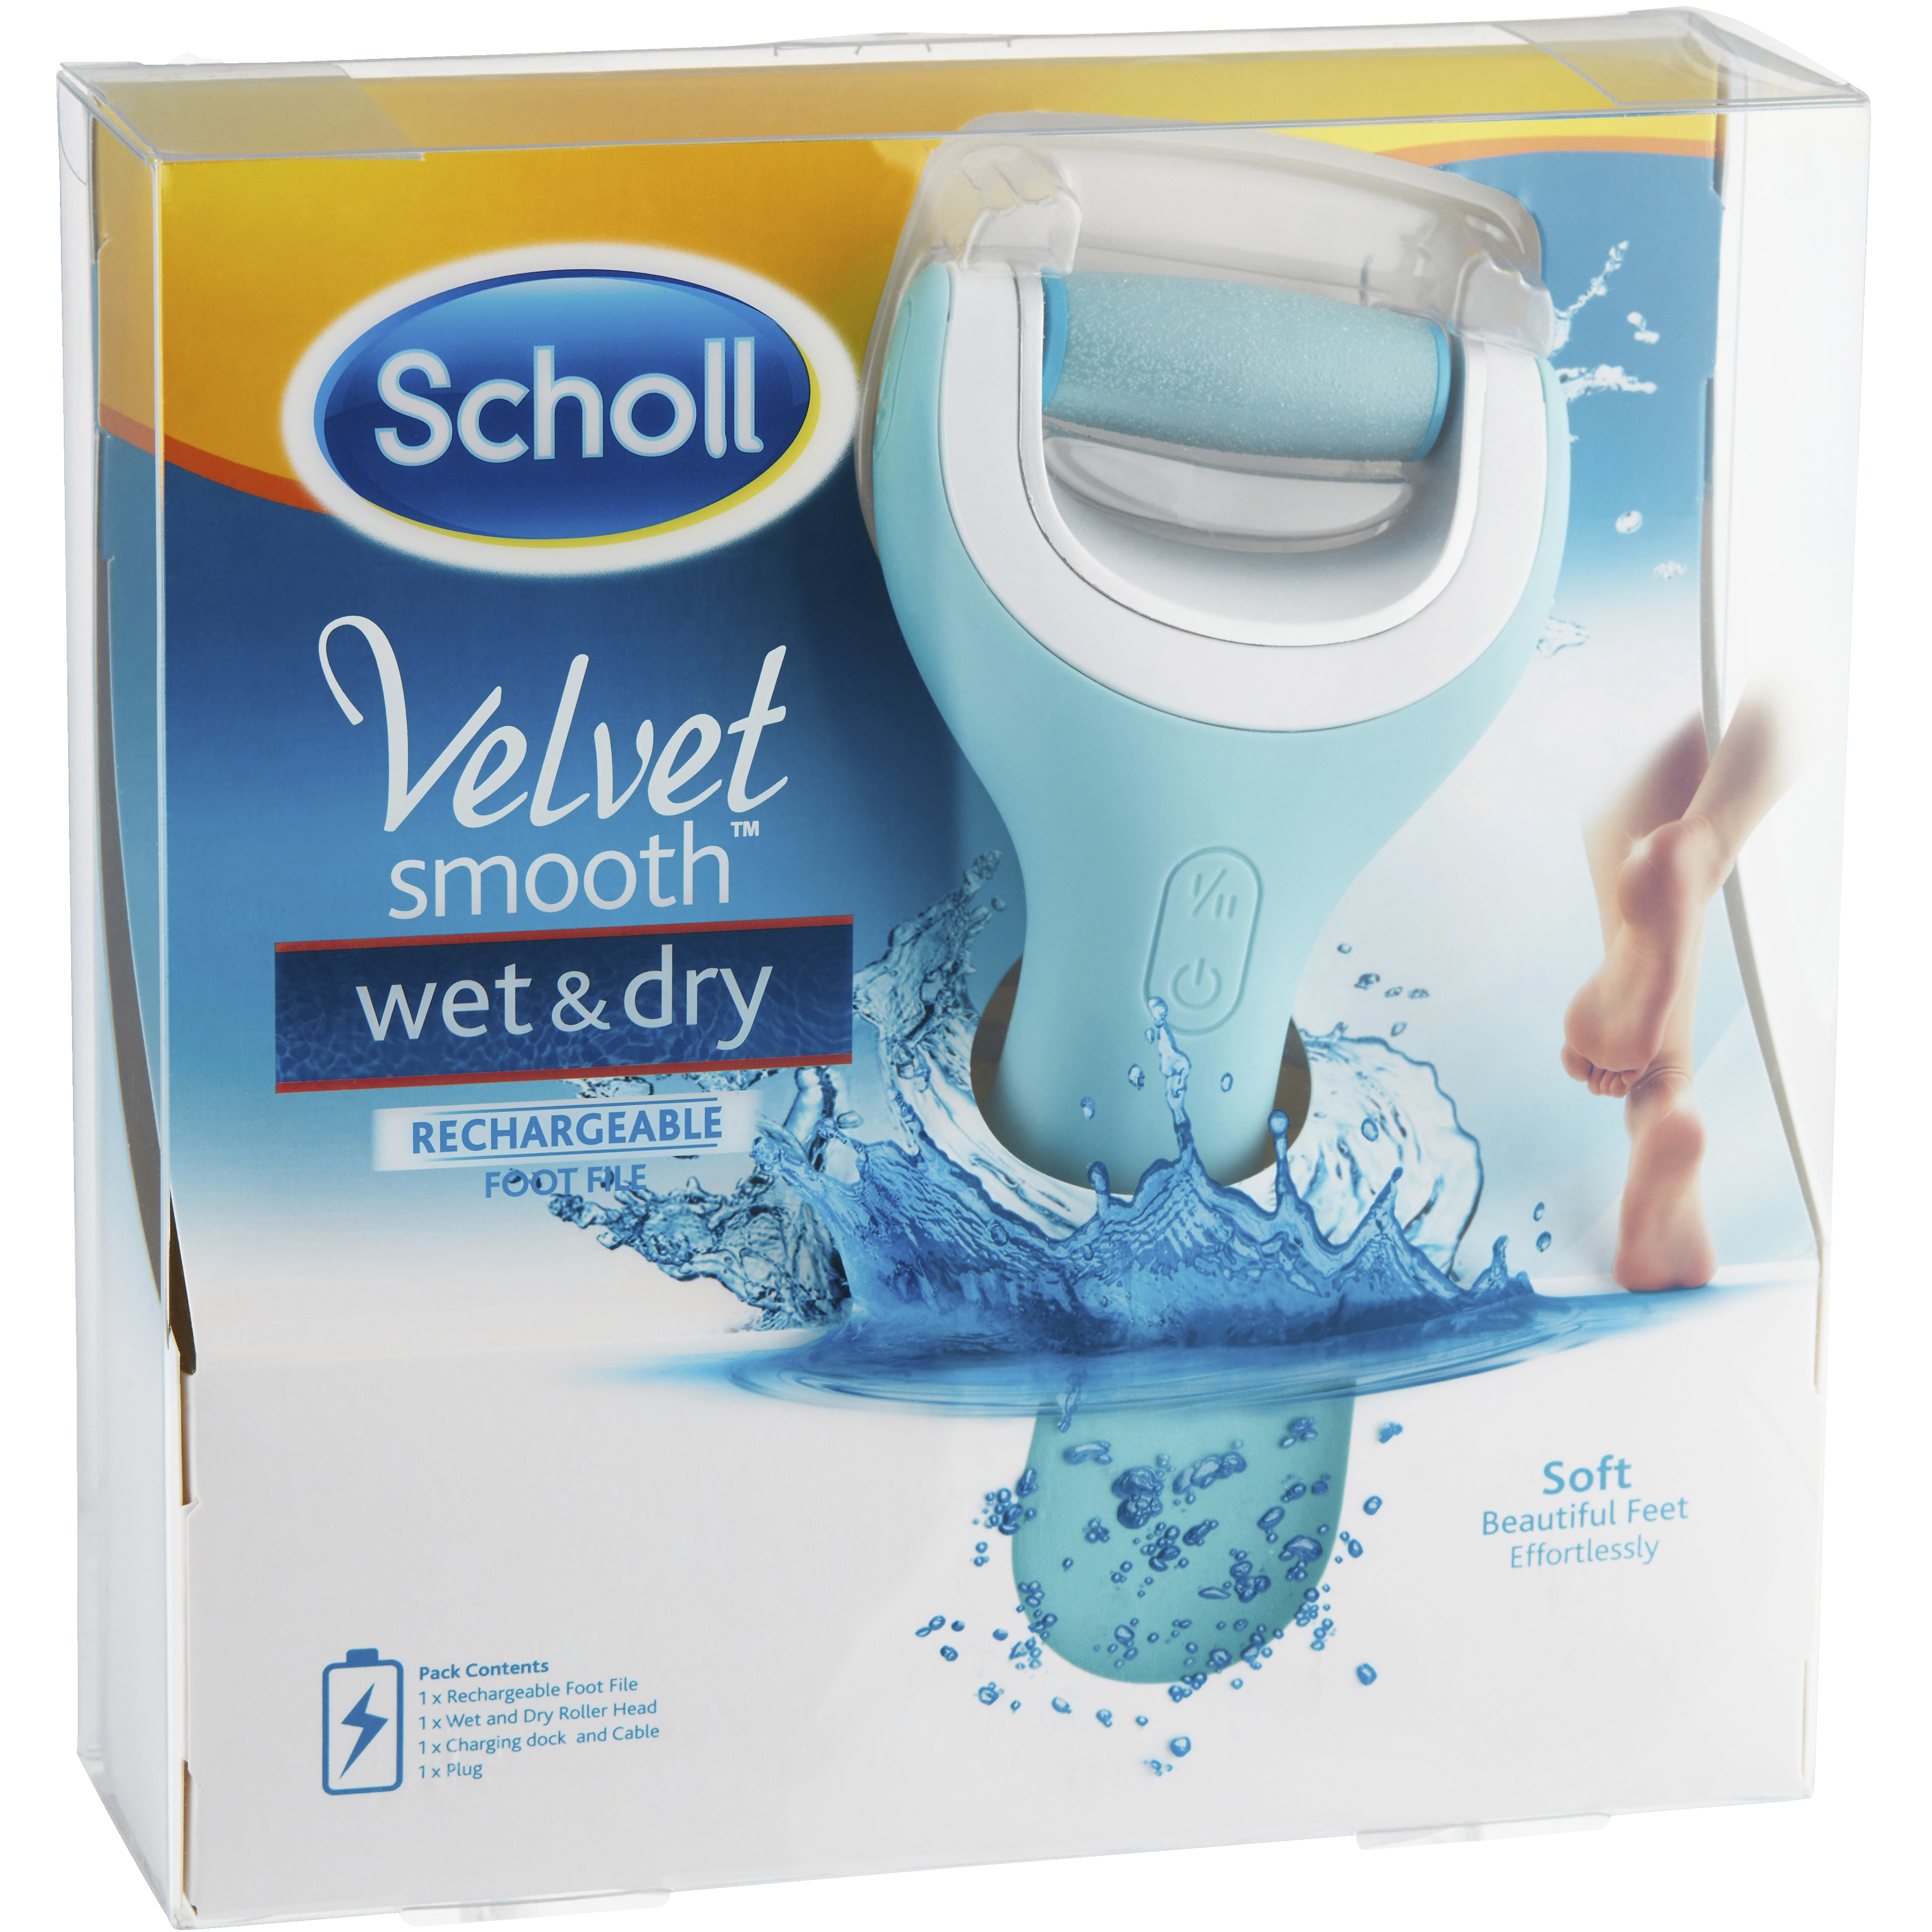 Scholl Velvet Smooth Pedi fotfil SCHOLL3021678 - Manikyr og ...